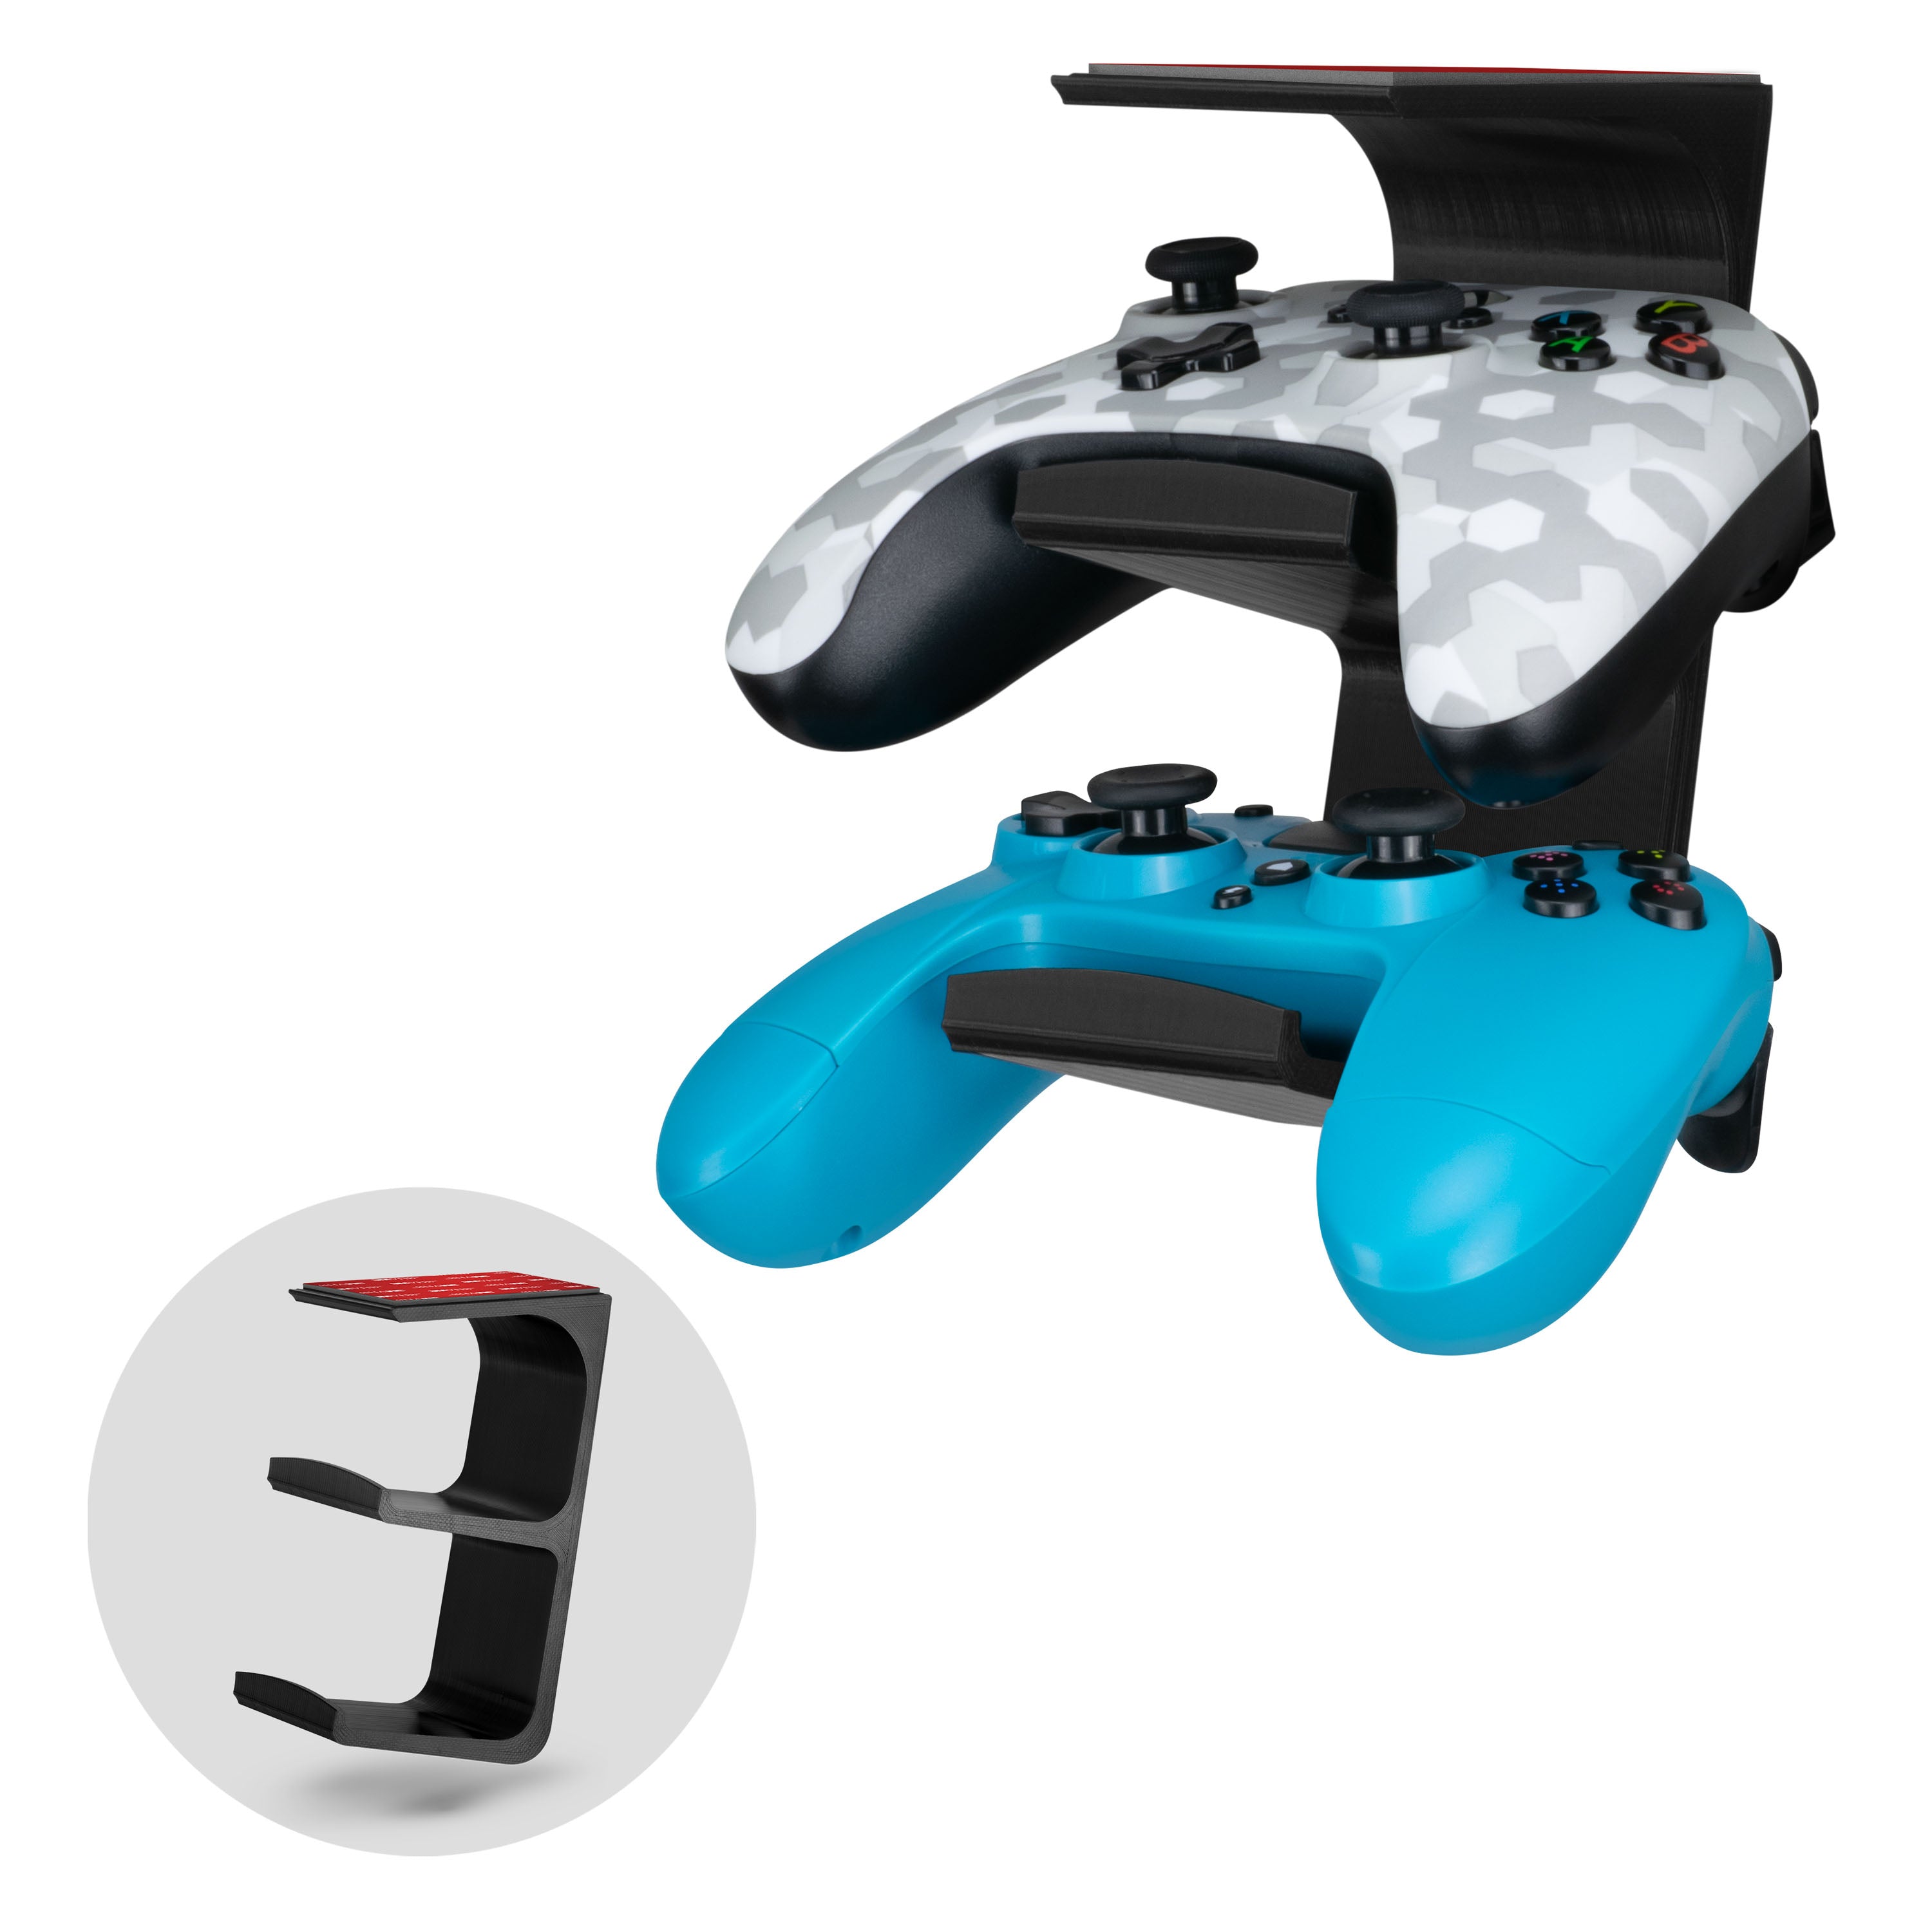 Titan - Desktop Headphone and Game Controller Hanger - Xbox, PS5/PS4, -  Brainwavz Audio